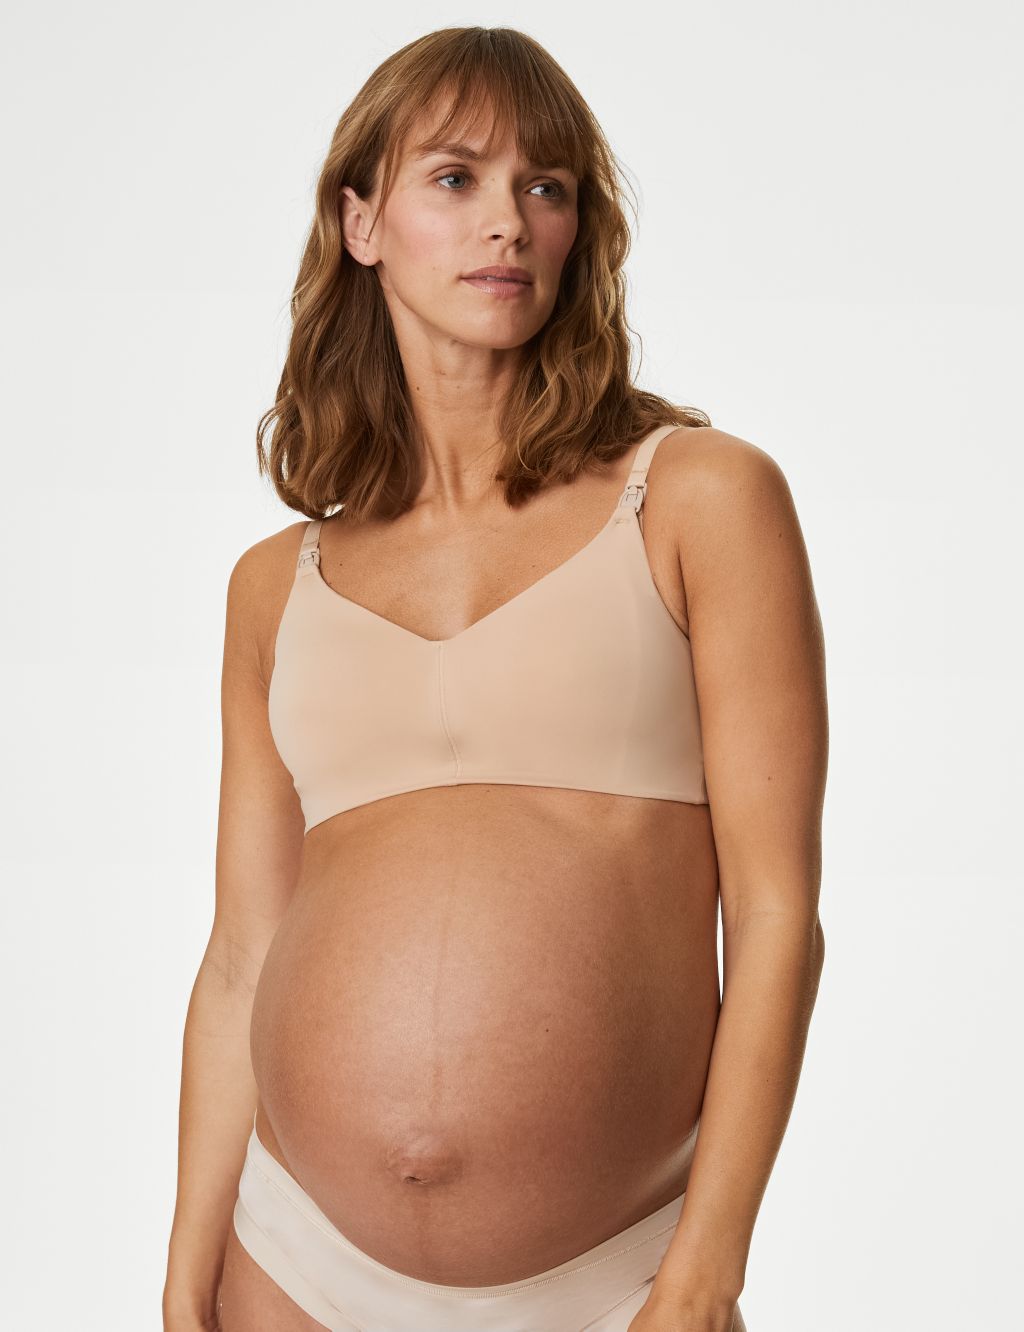 M&S Grey/White Striped Padded Maternity Bra - Size UK 36DD – Growth Spurtz